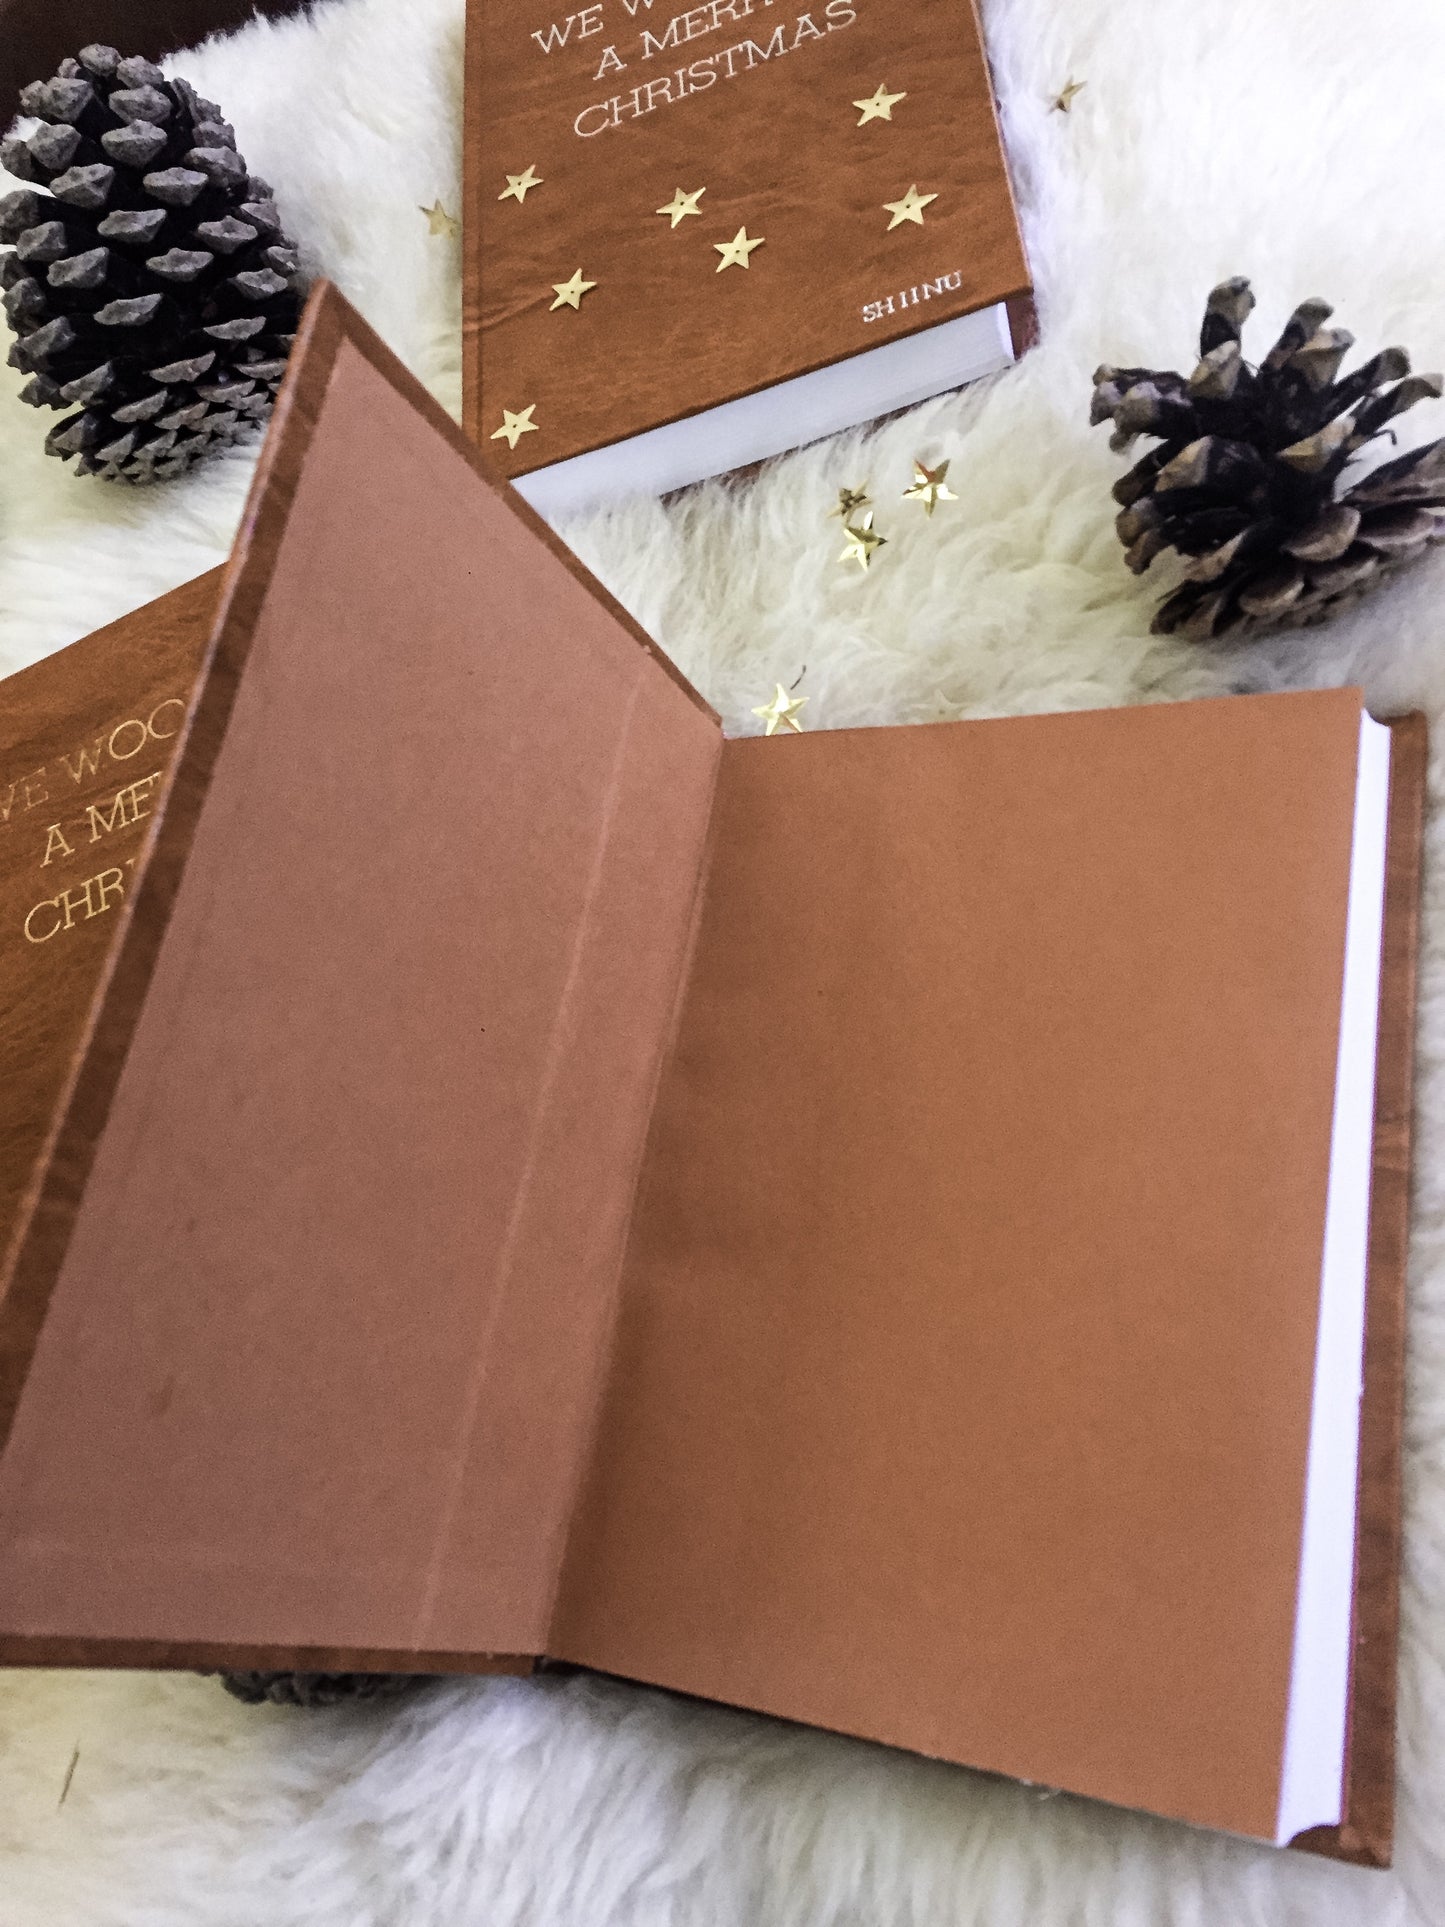 Handgemaakte notebook 'we woof you a merry christmas'